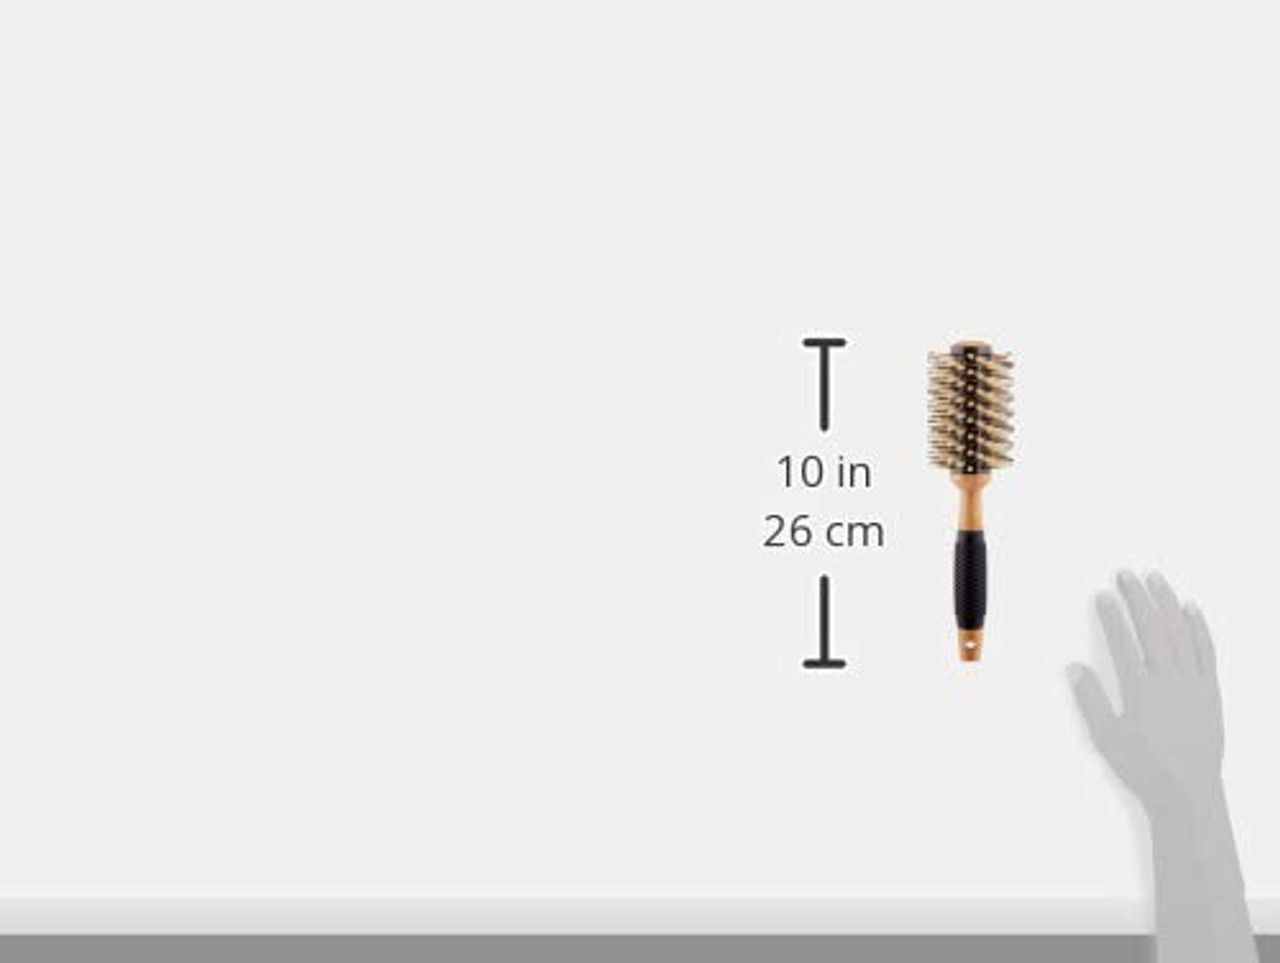 Sam Villa Signature Series Nylon & Boar Bristle Hair Brush 6-Piece Styling Brush Set with Case